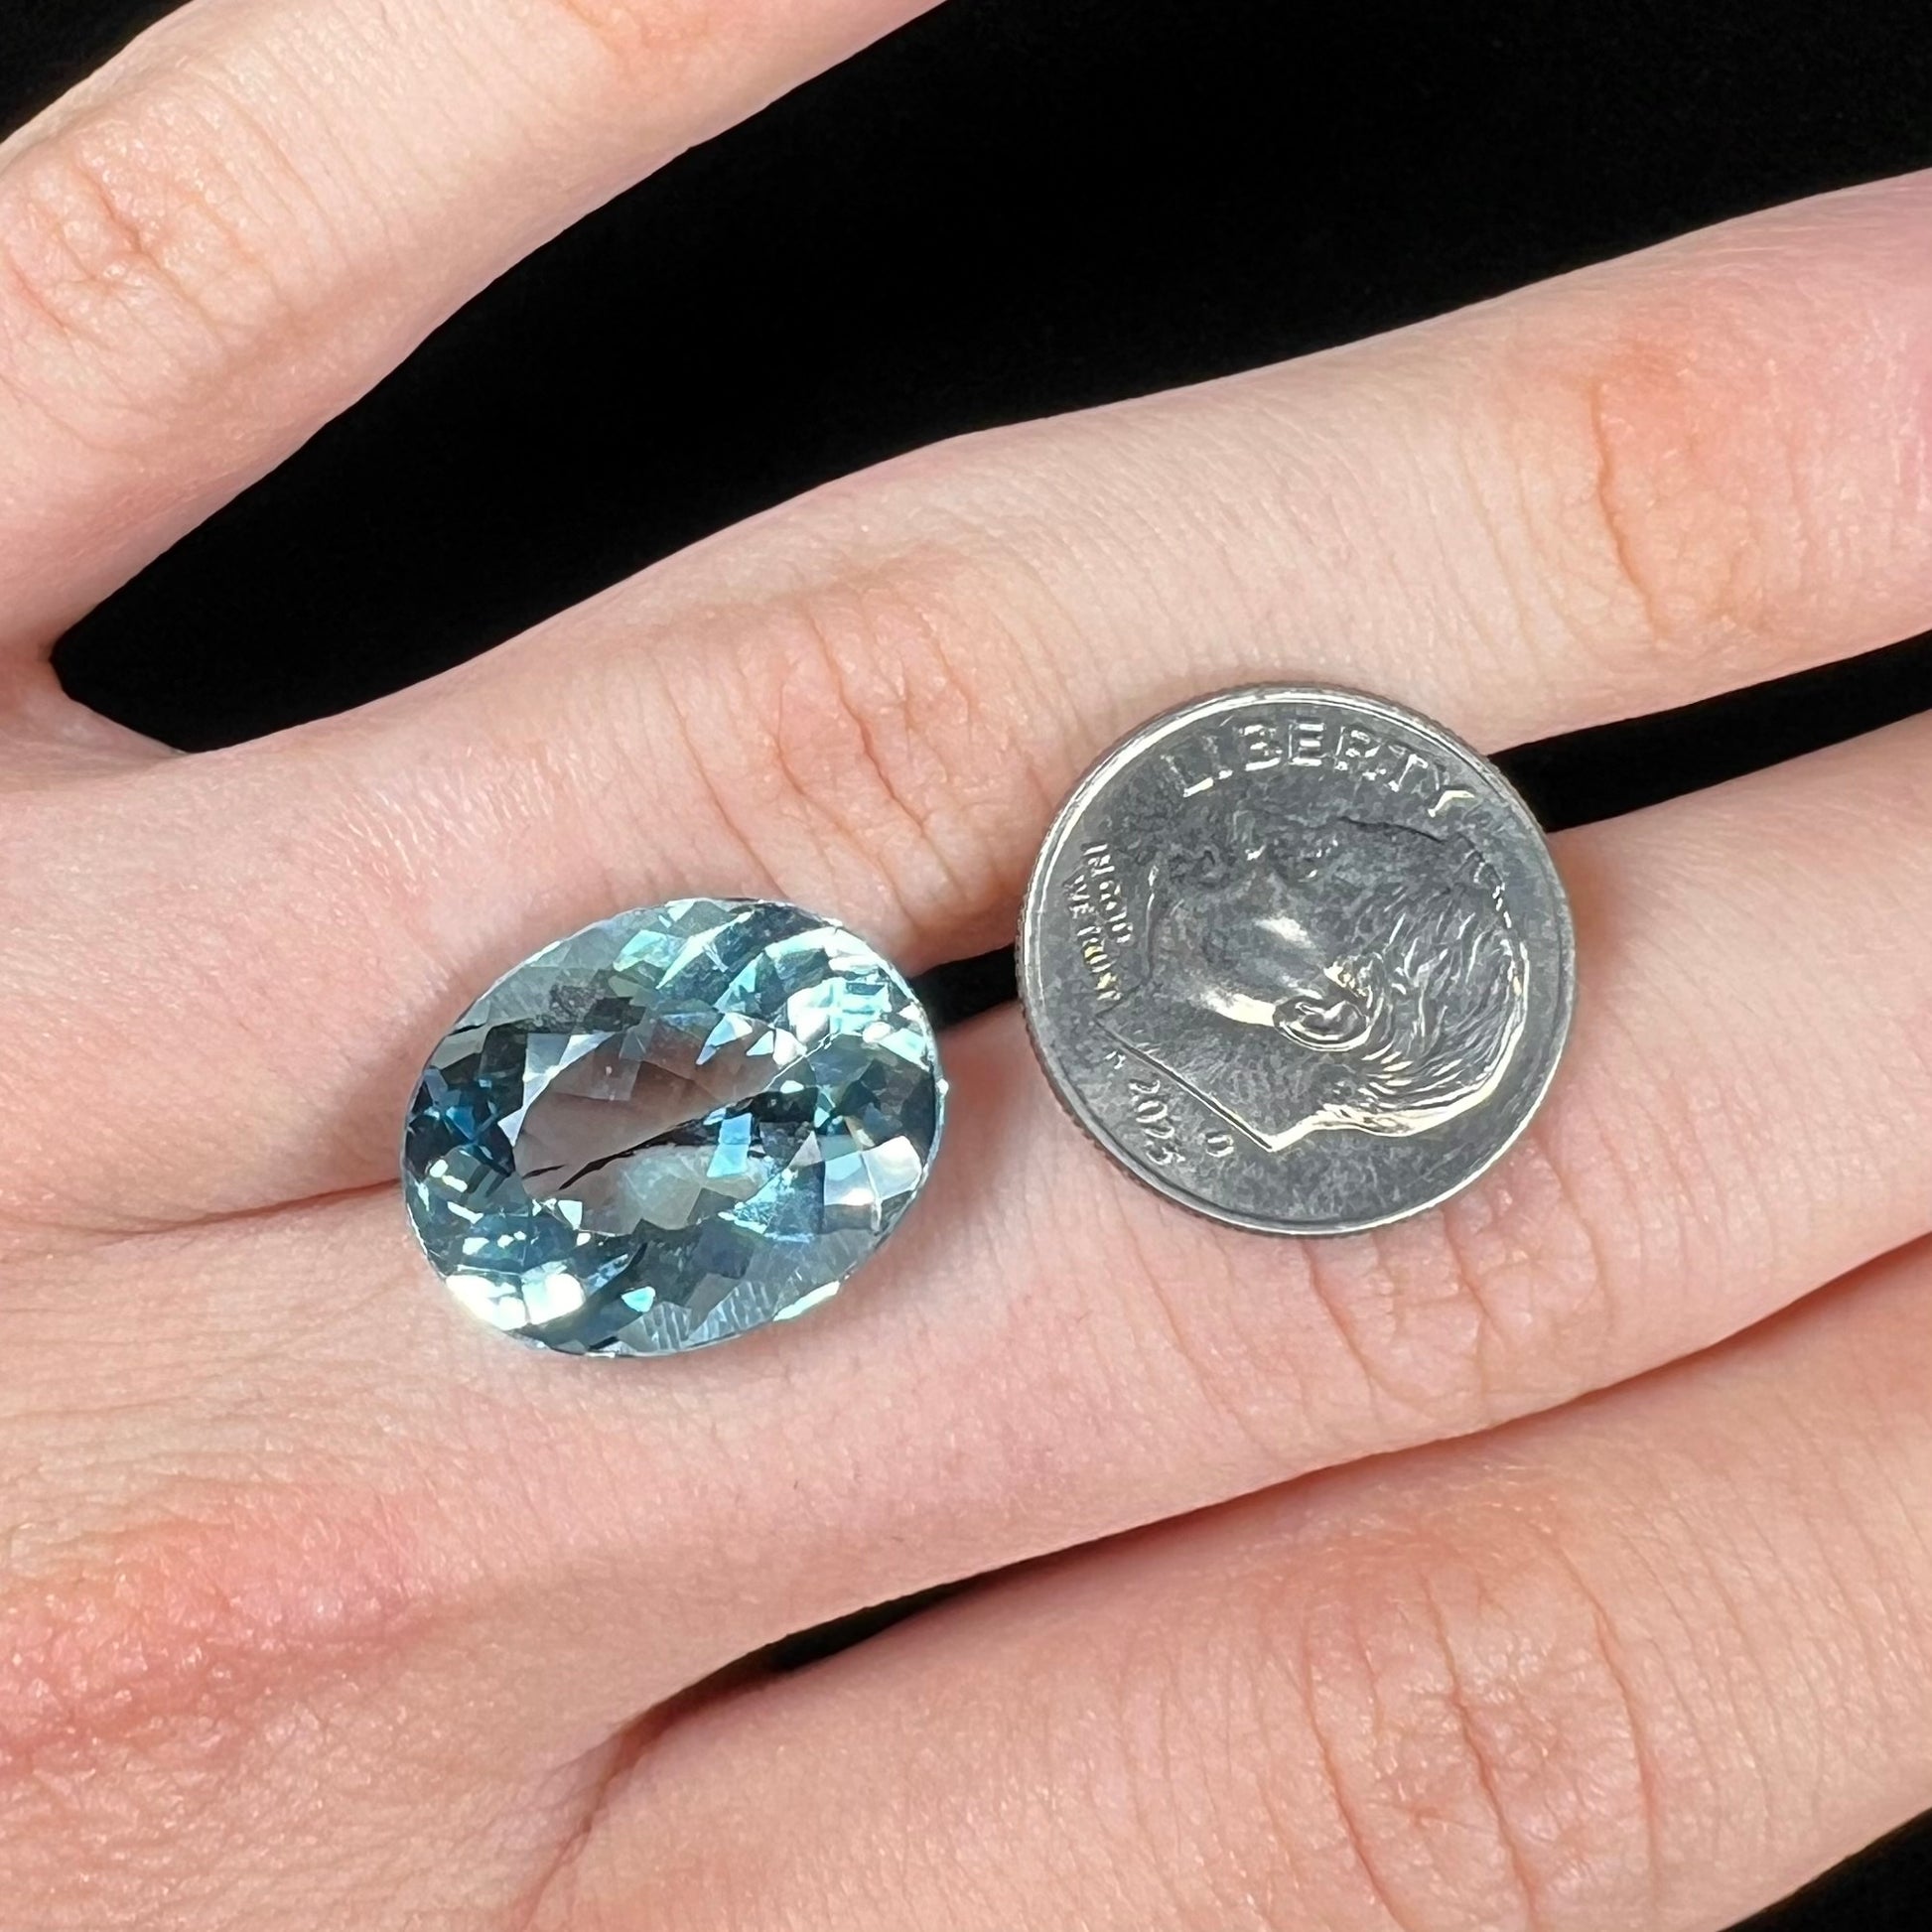 A loose, oval cut Brazilian aquamarine gemstone.  The stone is a rich aqua blue color.